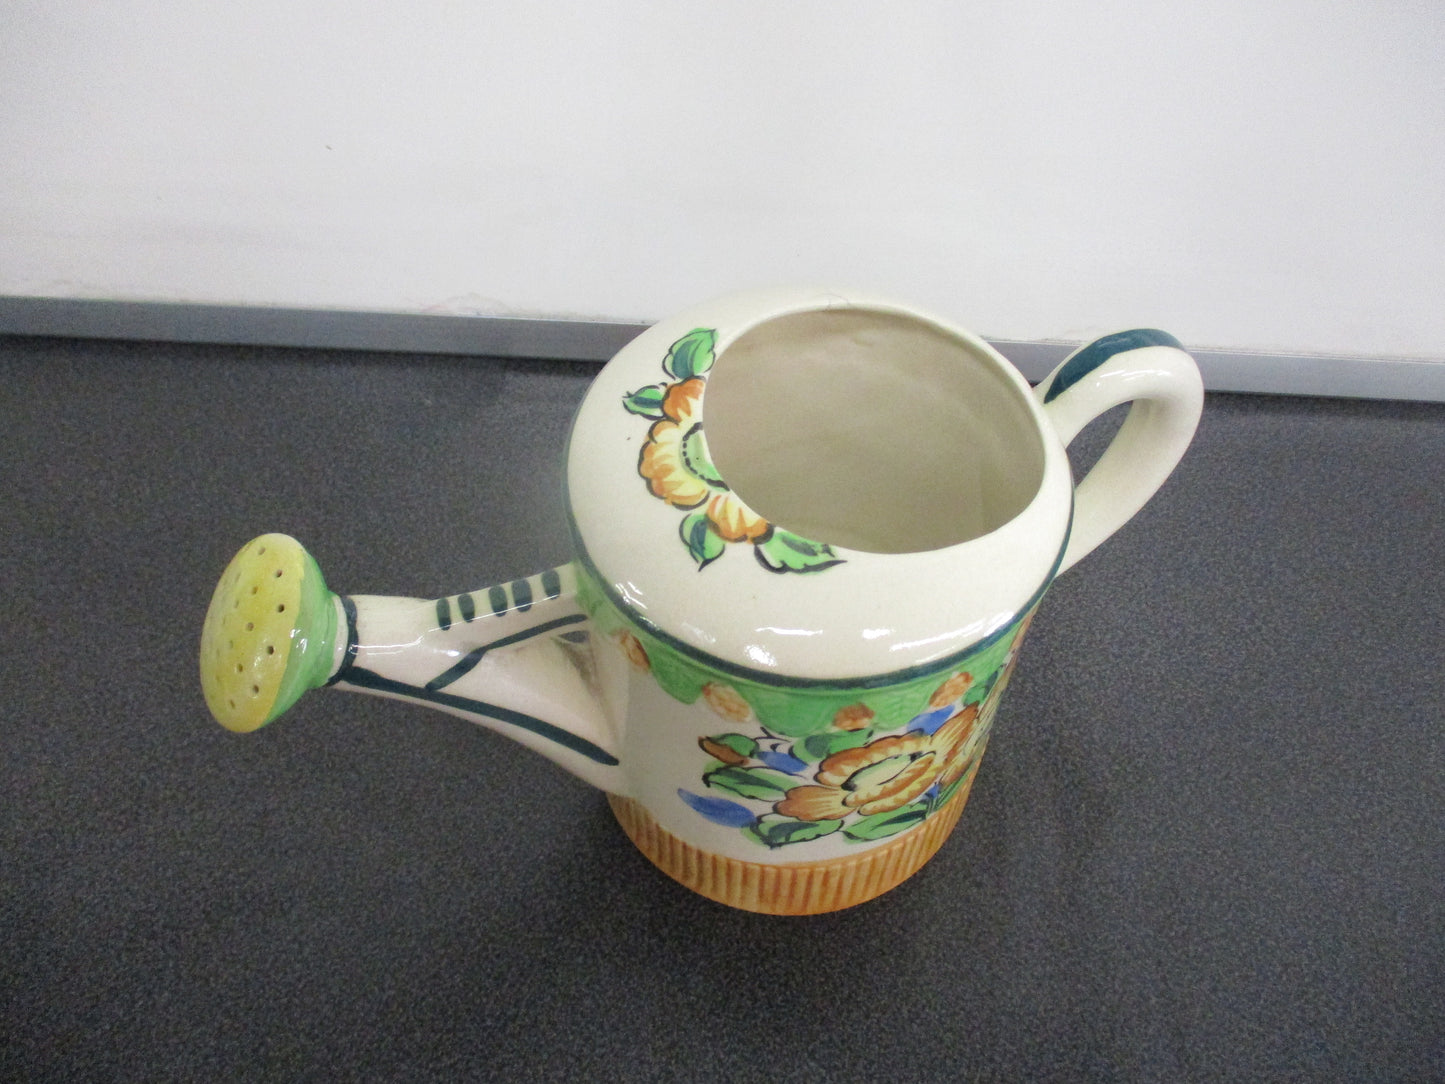 Moriyama Porcelain Decorative Watering Can 6 1/2" tall